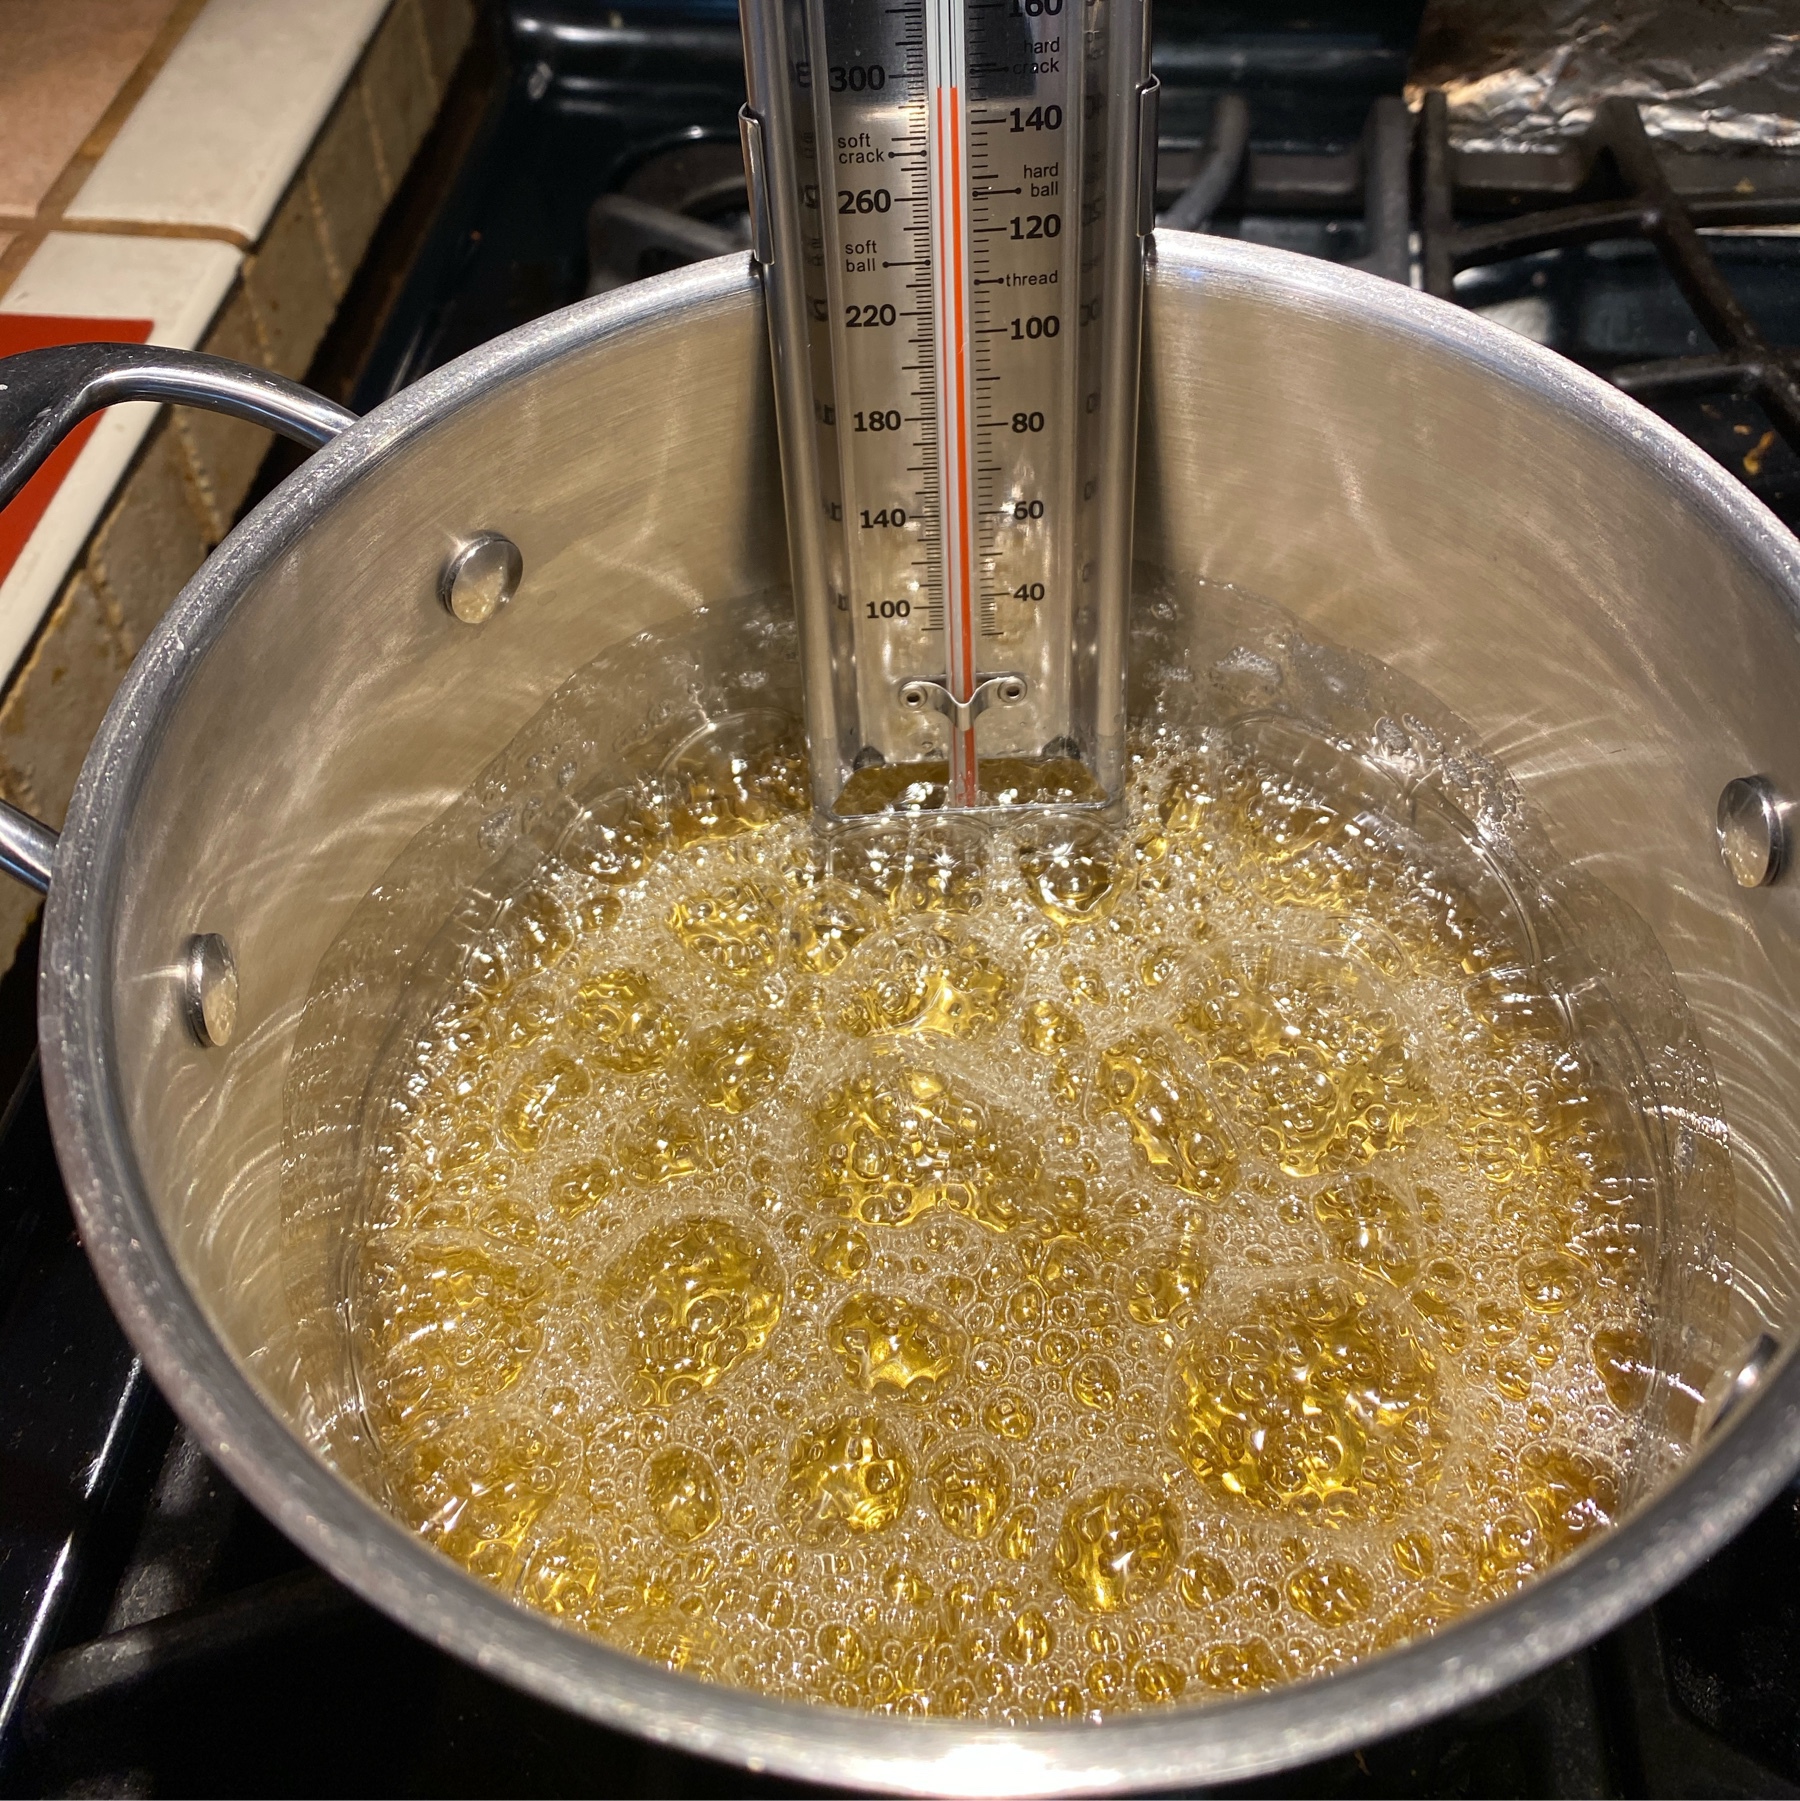 boling sugar mixture a gold color, almost 300F